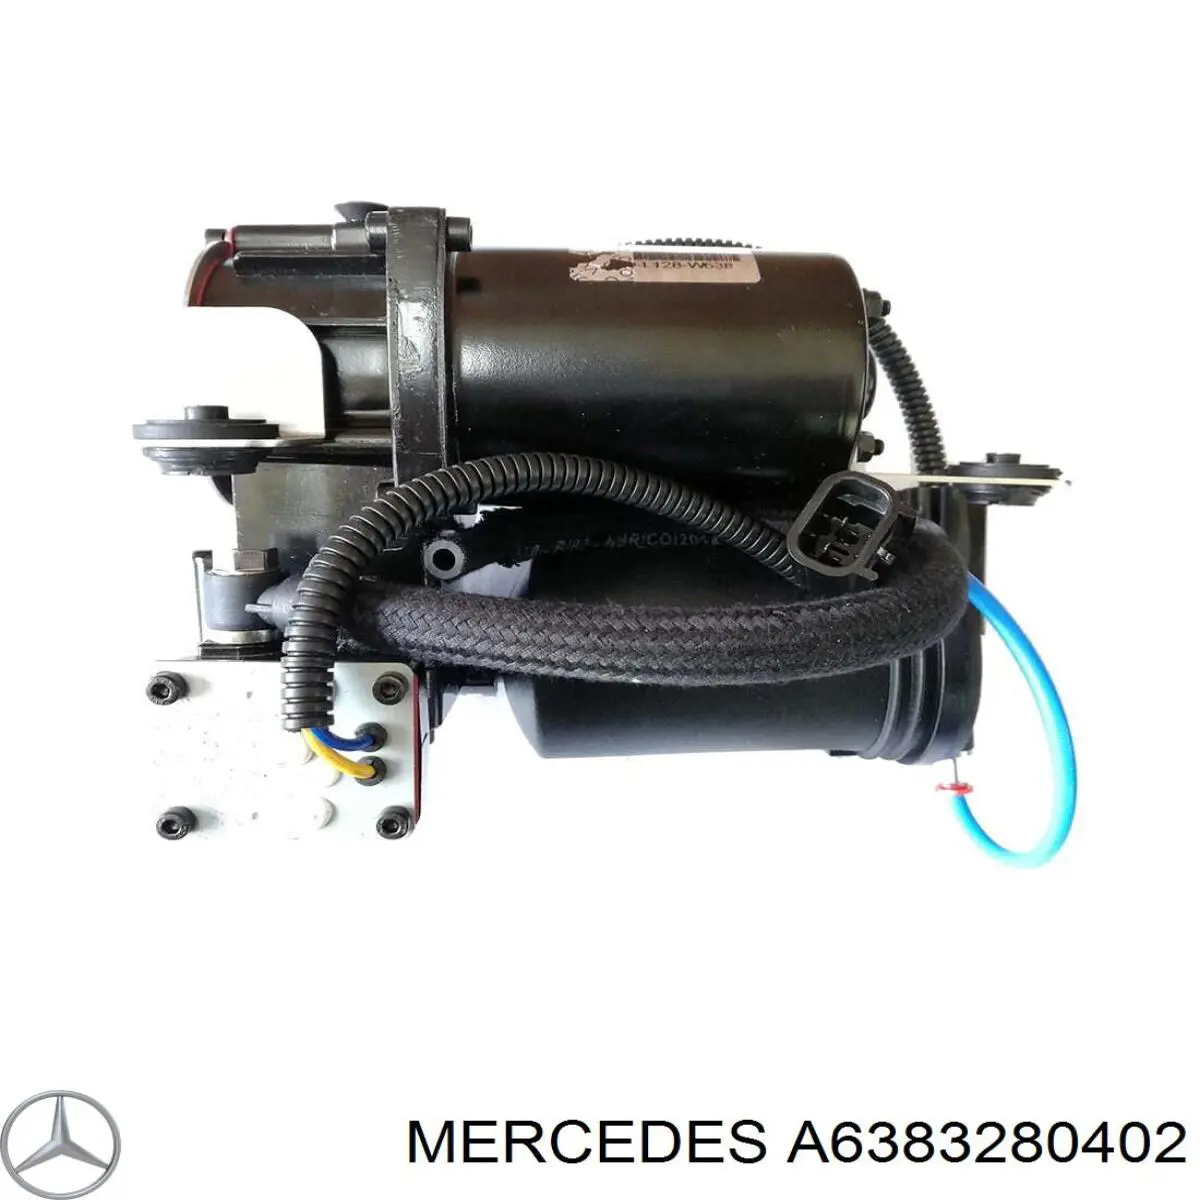 A6383280402 Mercedes компрессор пневмоподкачки (амортизаторов)